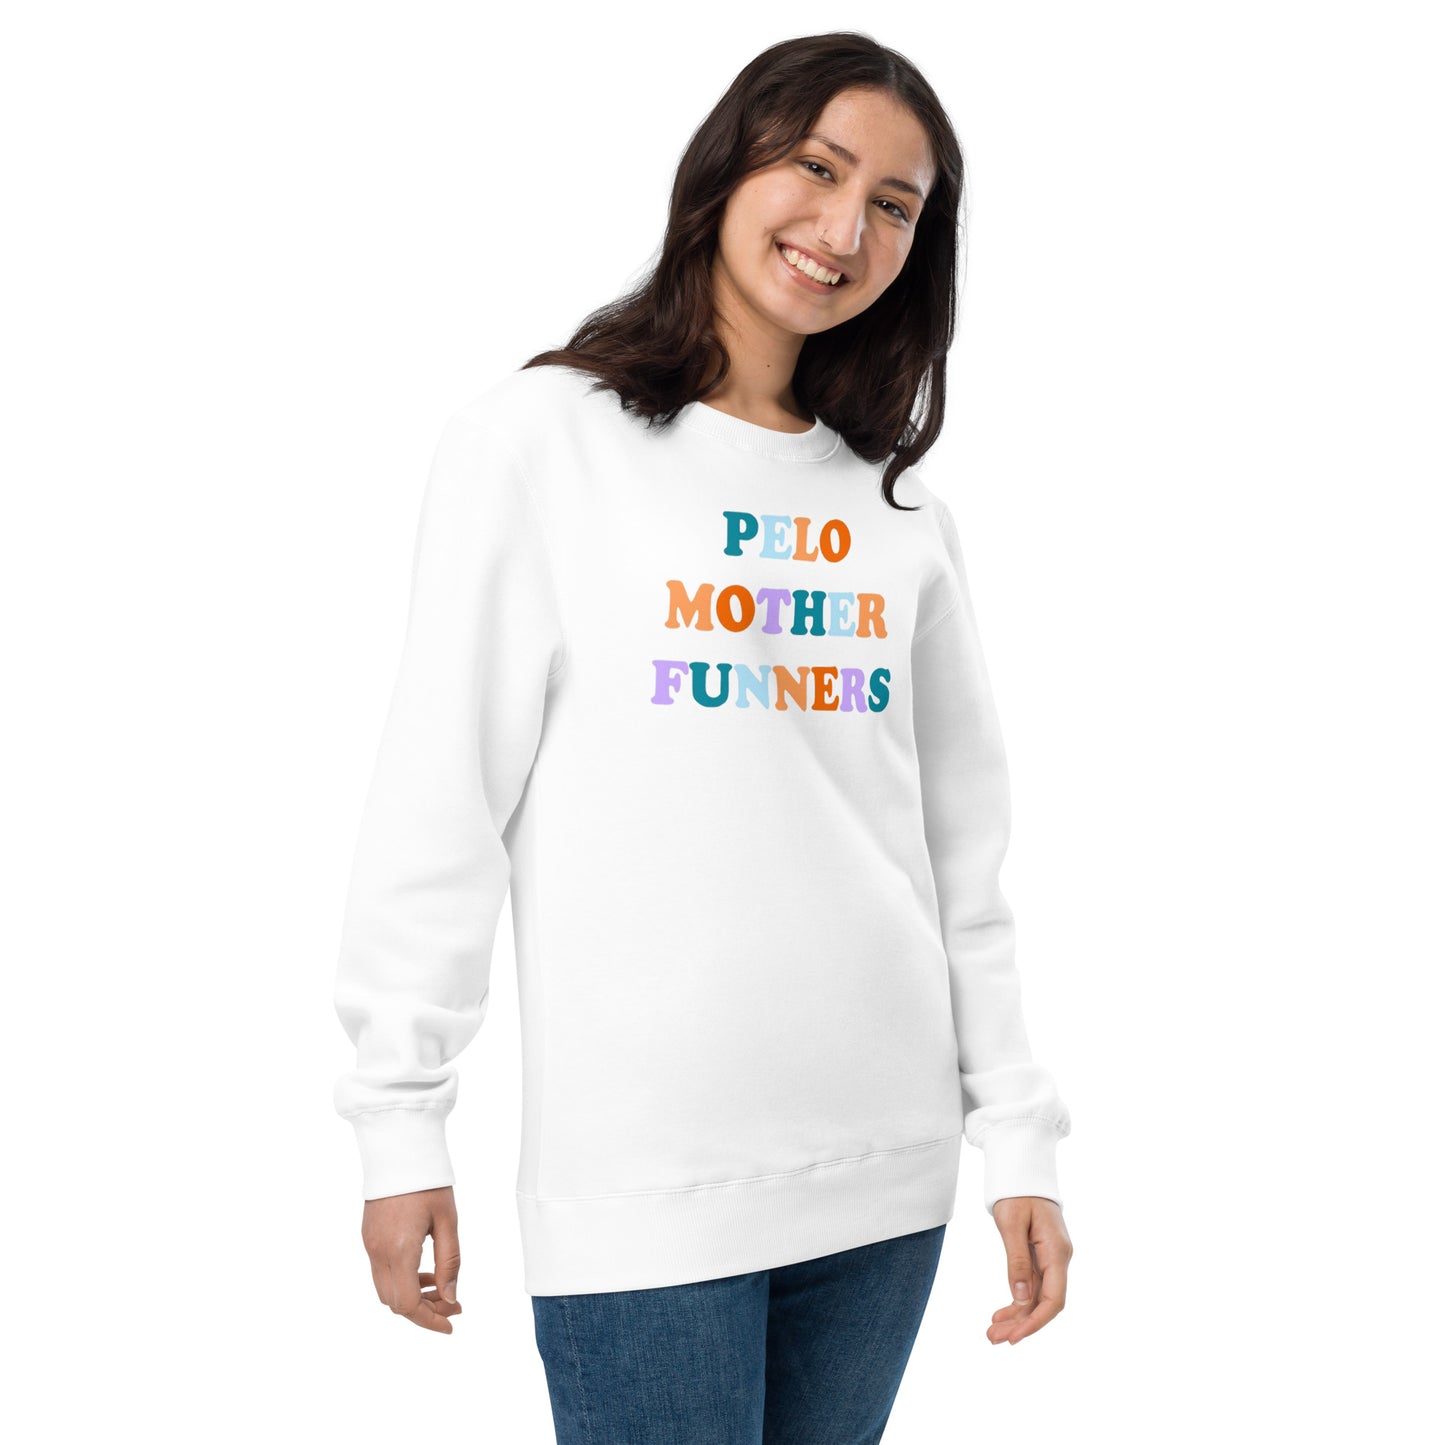 Pelo Mother Funners - Unisex fashion sweatshirt